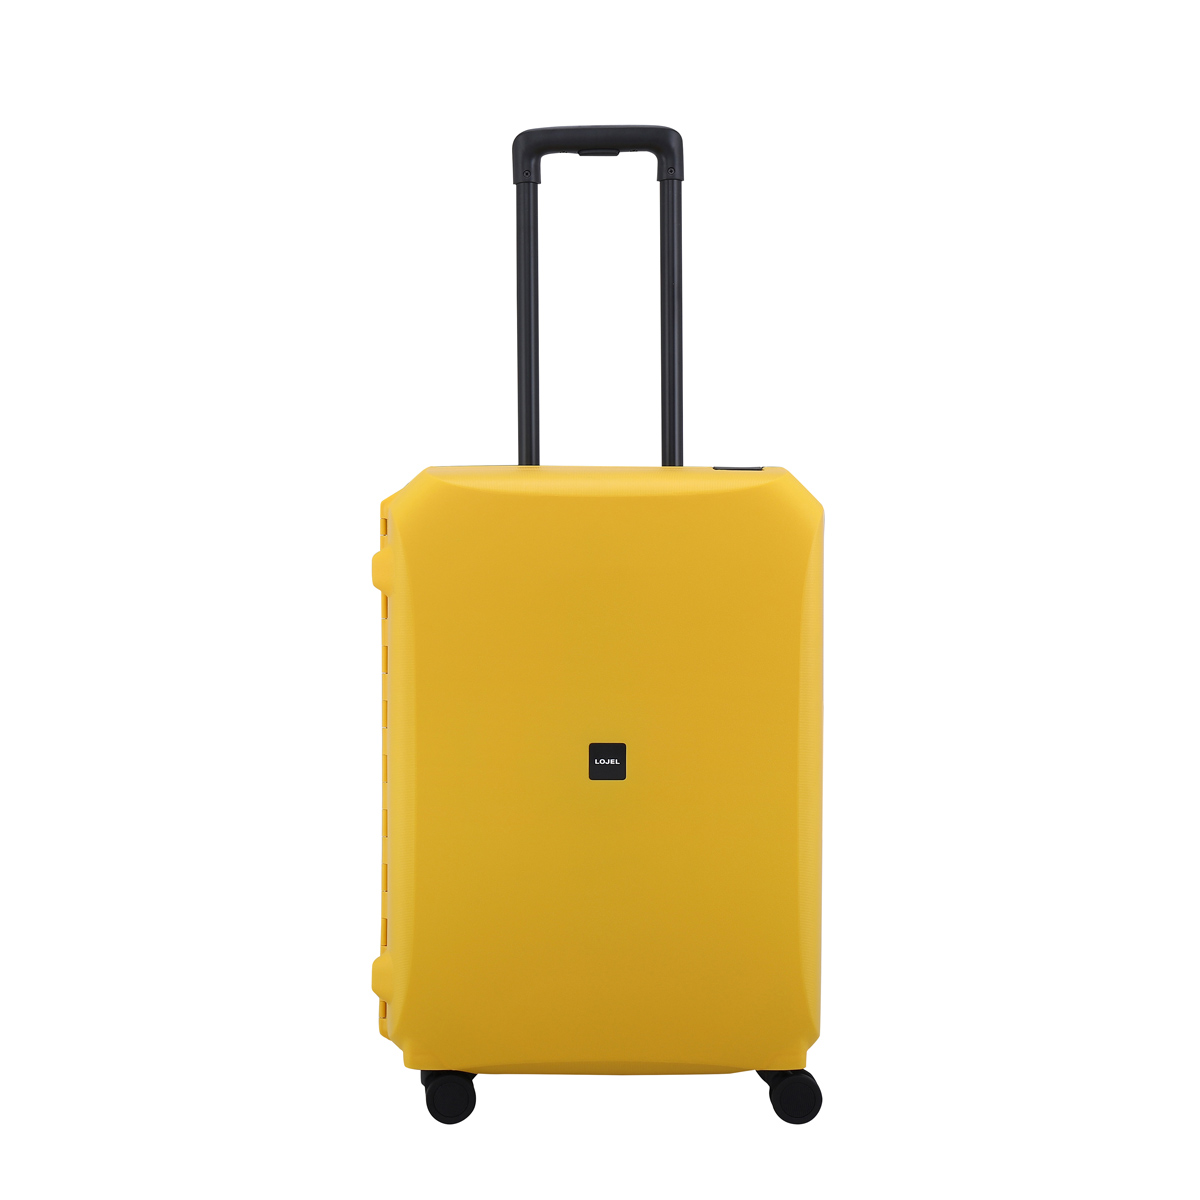 چمدان لوجل مدل Voja سایز متوسط